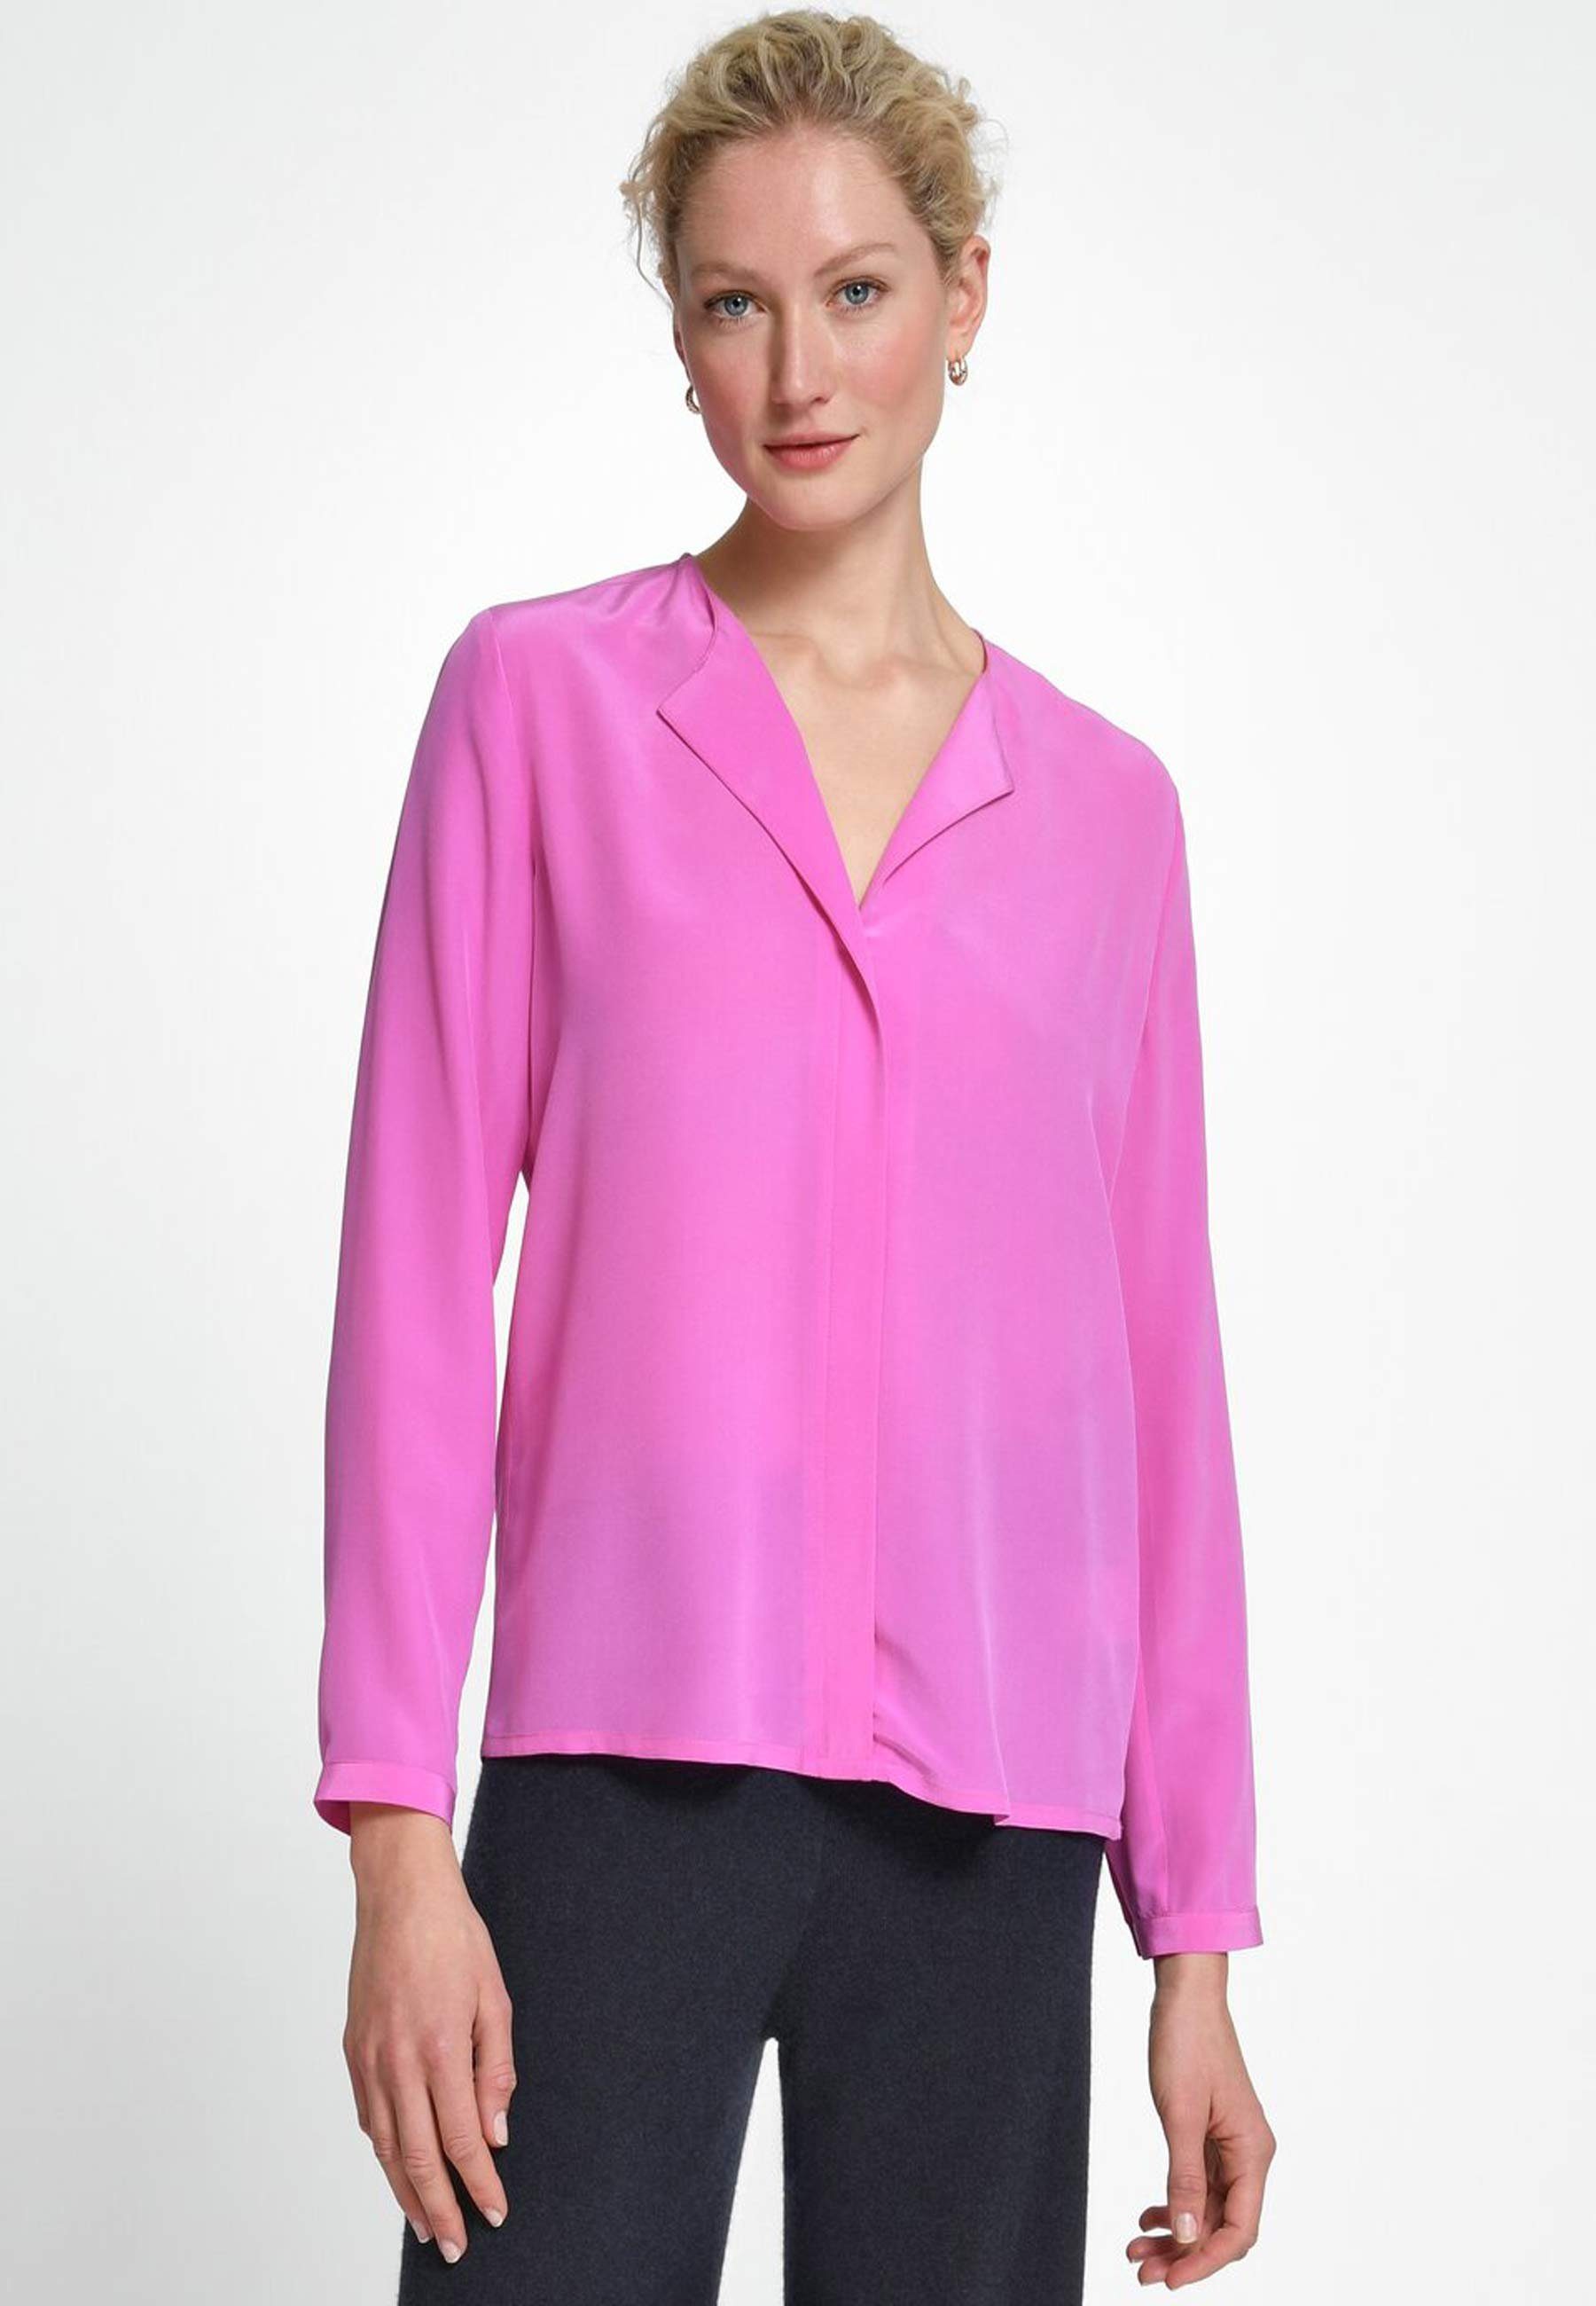 Silk mit include klassischem Klassische Bluse Design